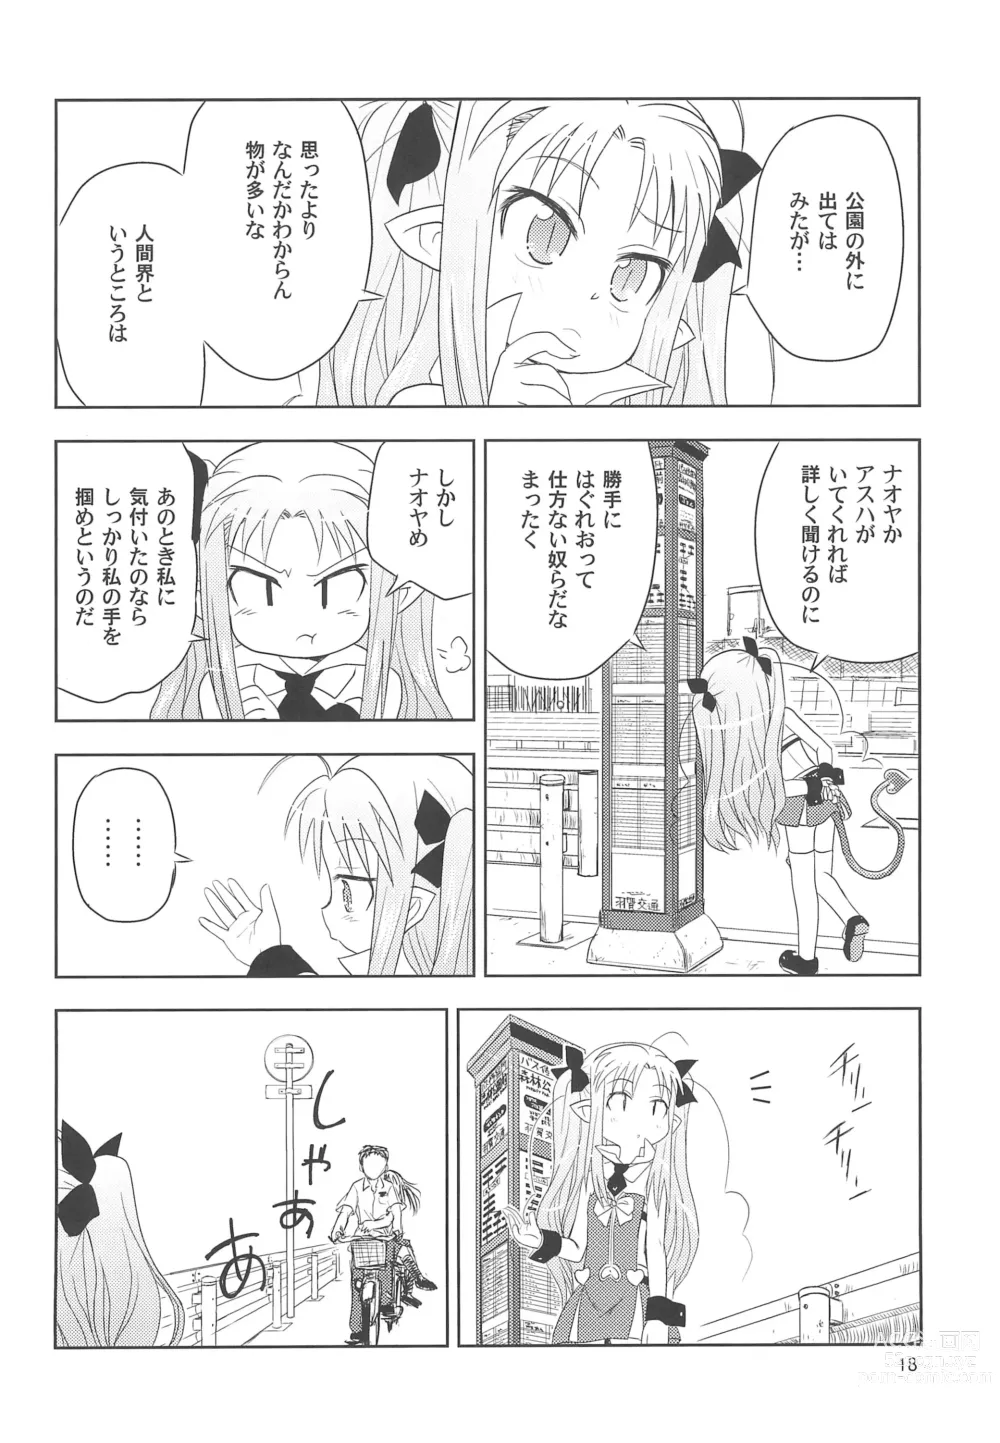 Page 18 of doujinshi Maigo no Maigo no Hime-sama Plus